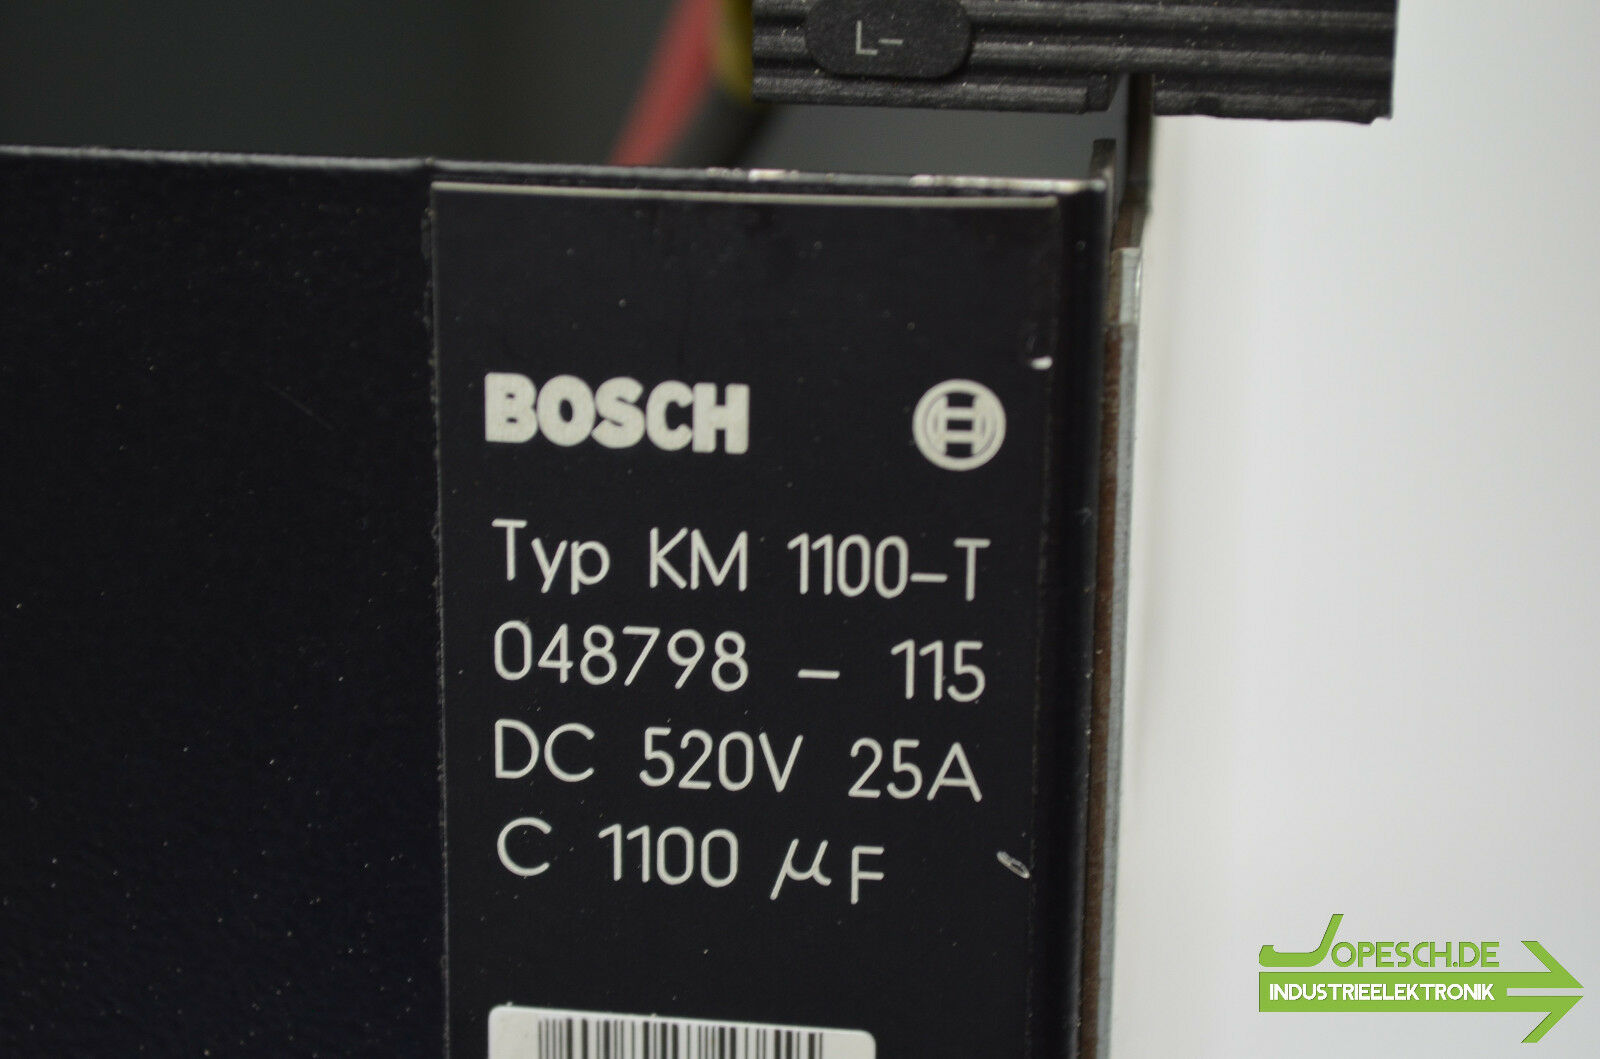 Bosch Kondensator Modul Typ KM 1100-T DC 520V 25A